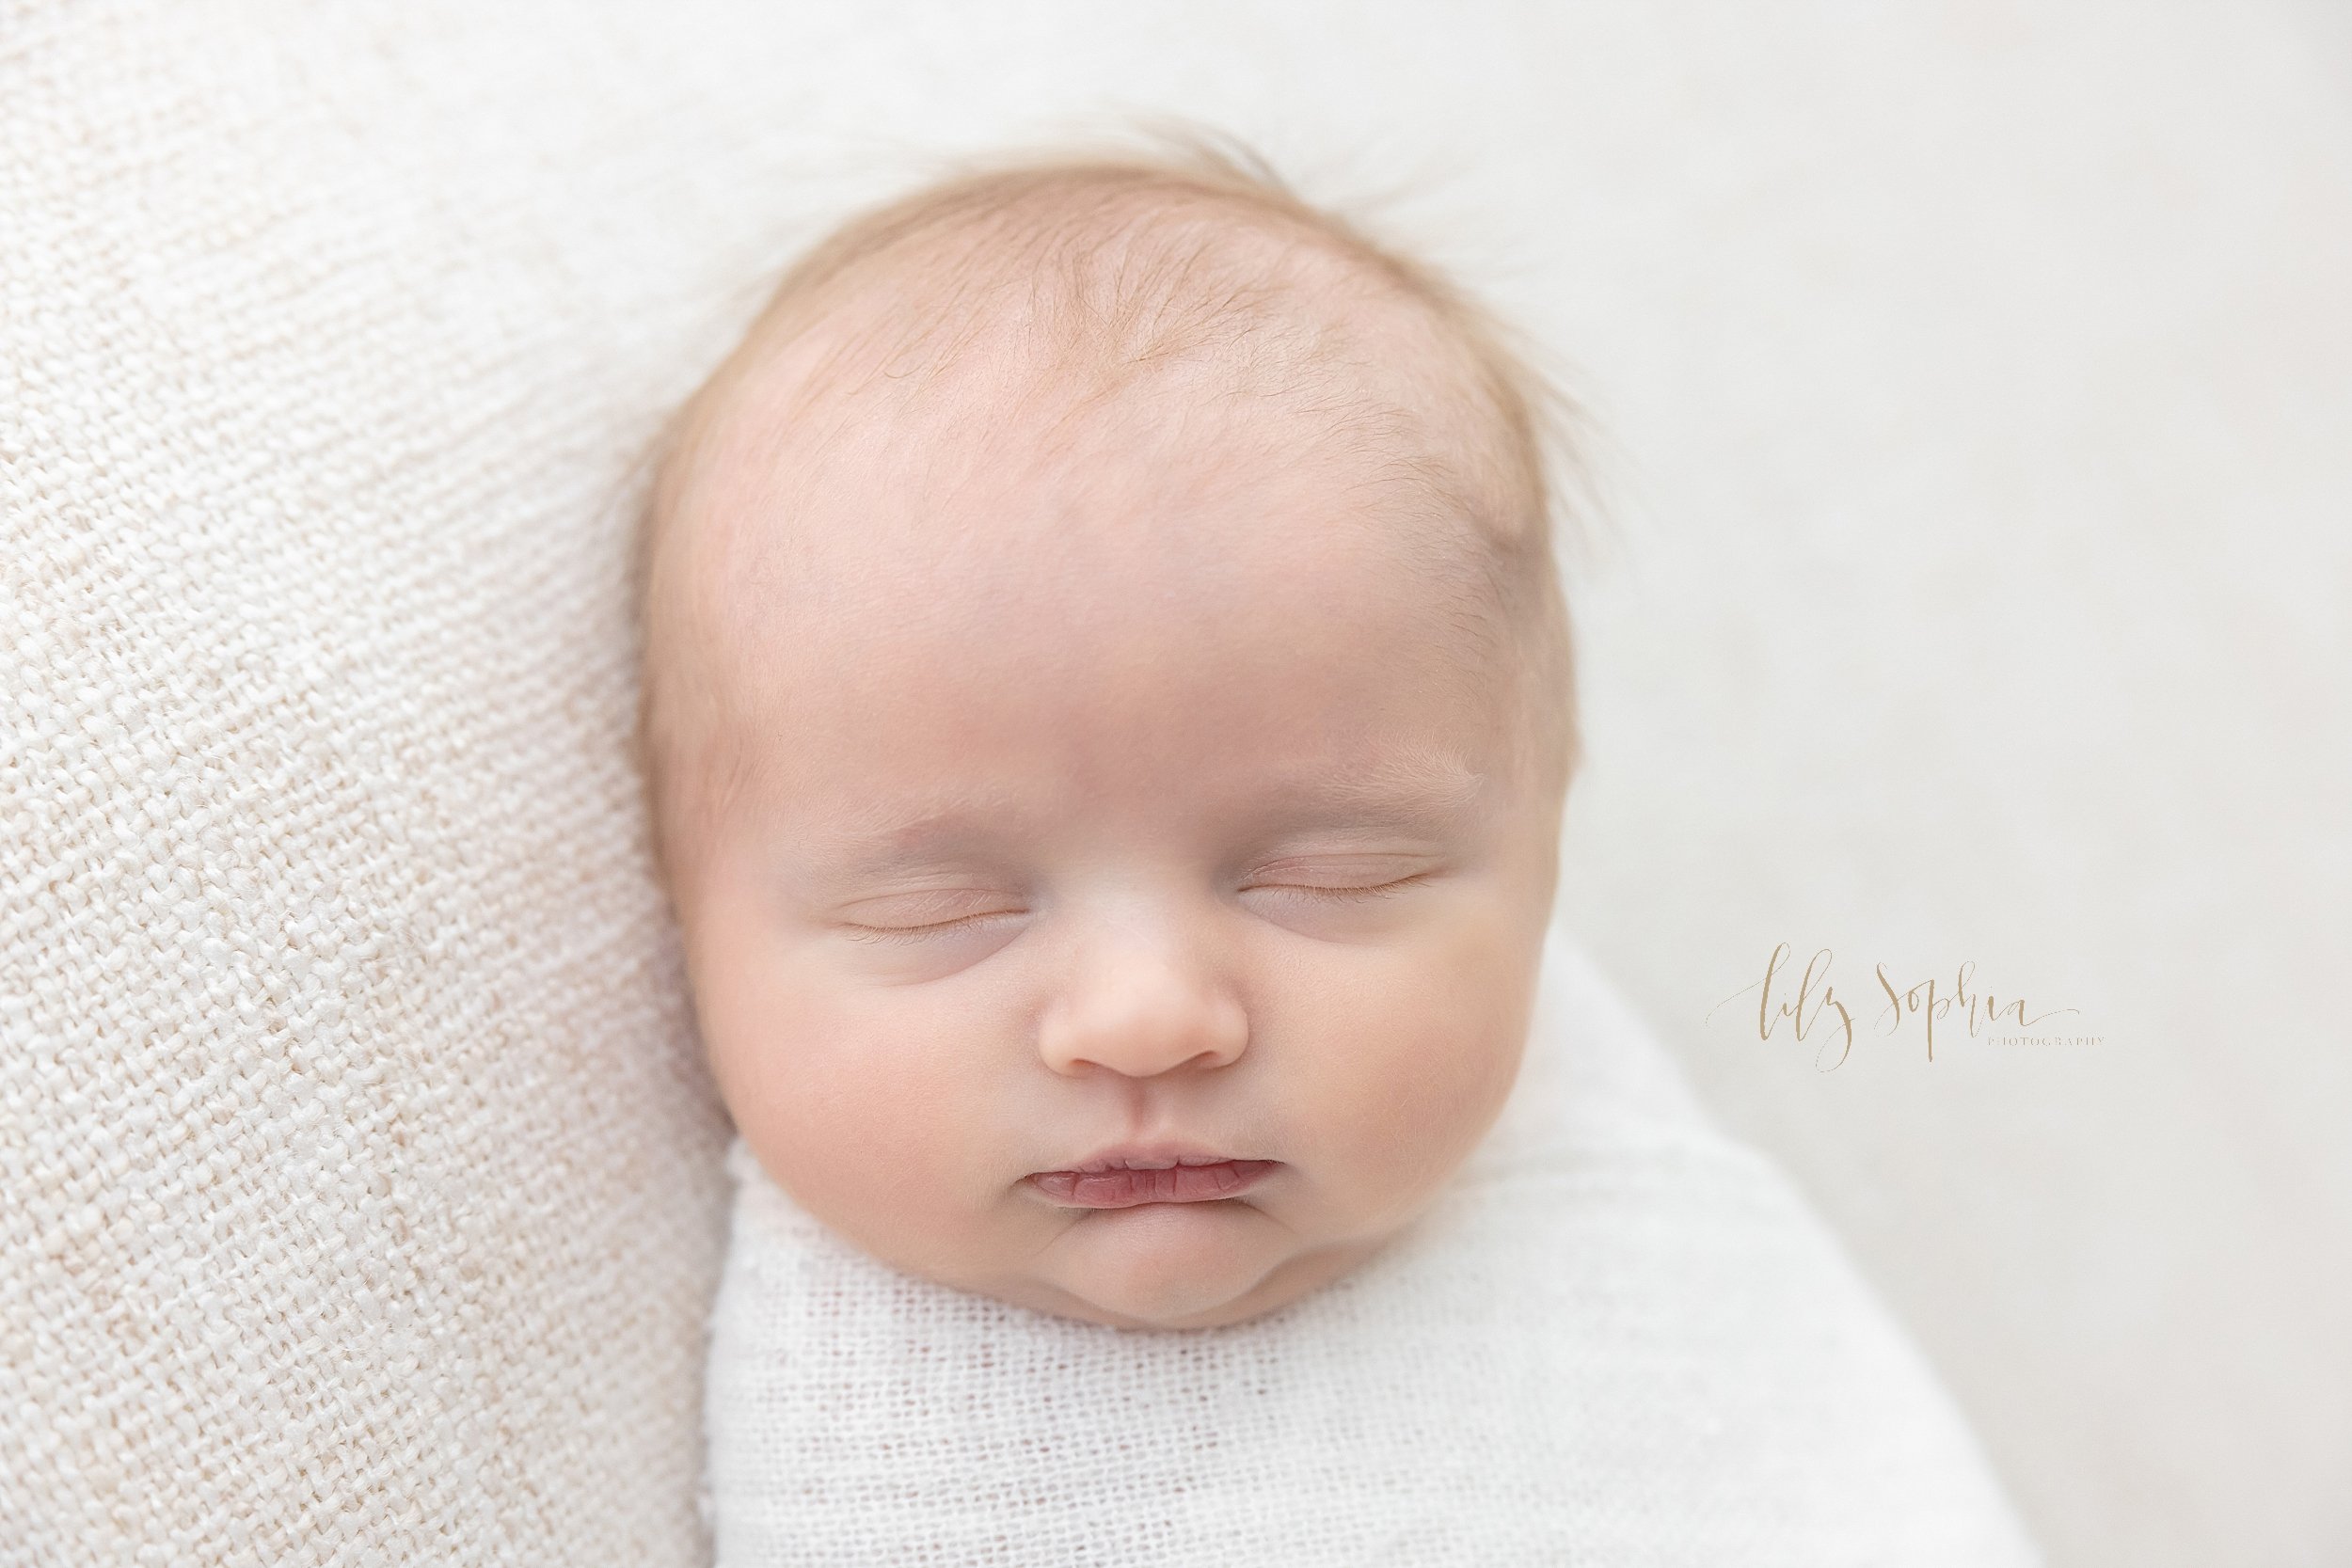 intown-atlanta-grant-park-decatur-buckhead-family-newborn-baby-boy-studio-photoshoot_2792.jpg